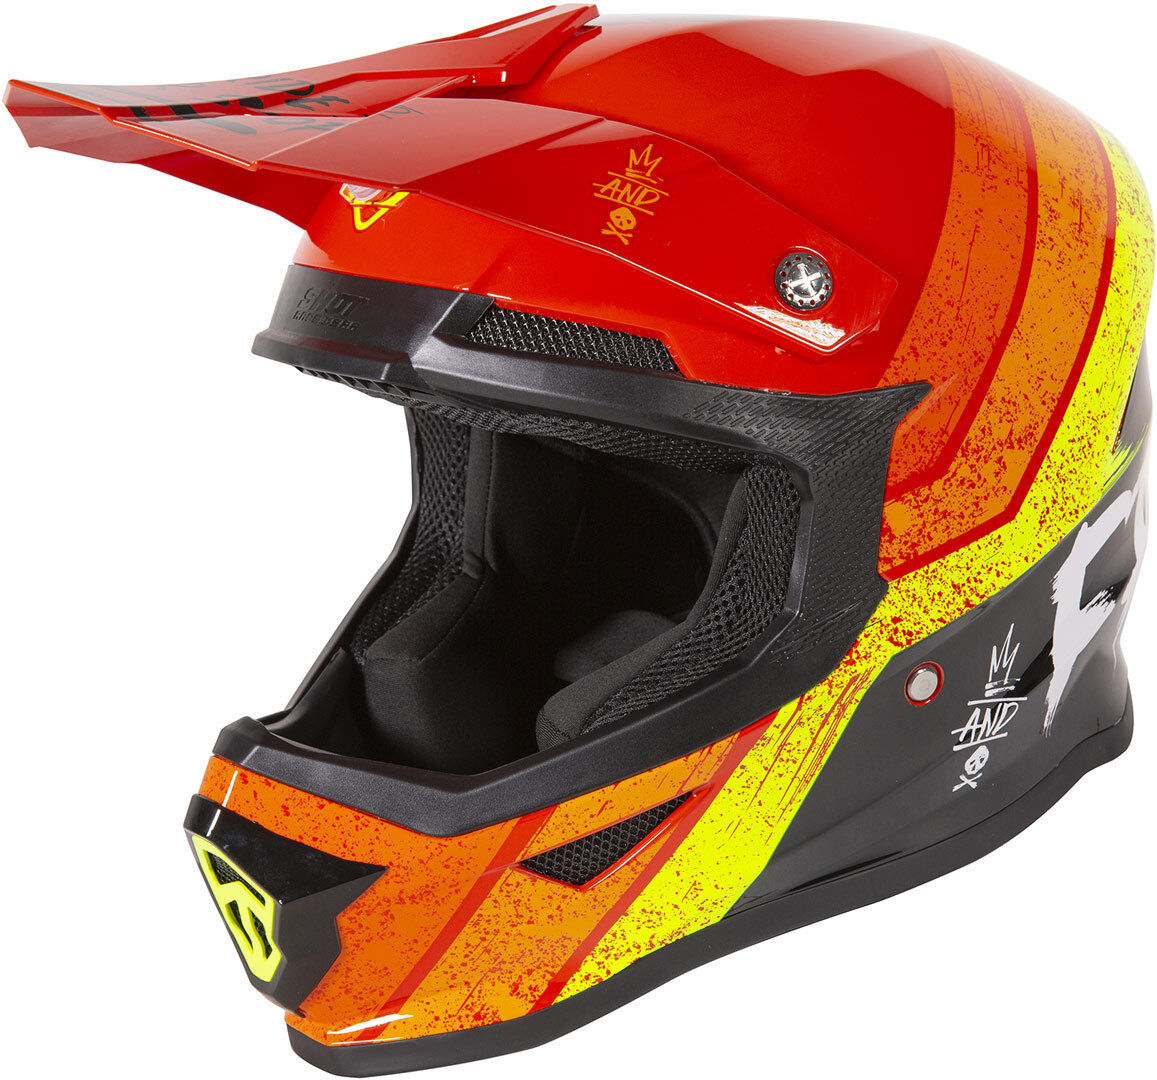 Freegun XP4 Stripes Casco de Motocross - Rojo (L)